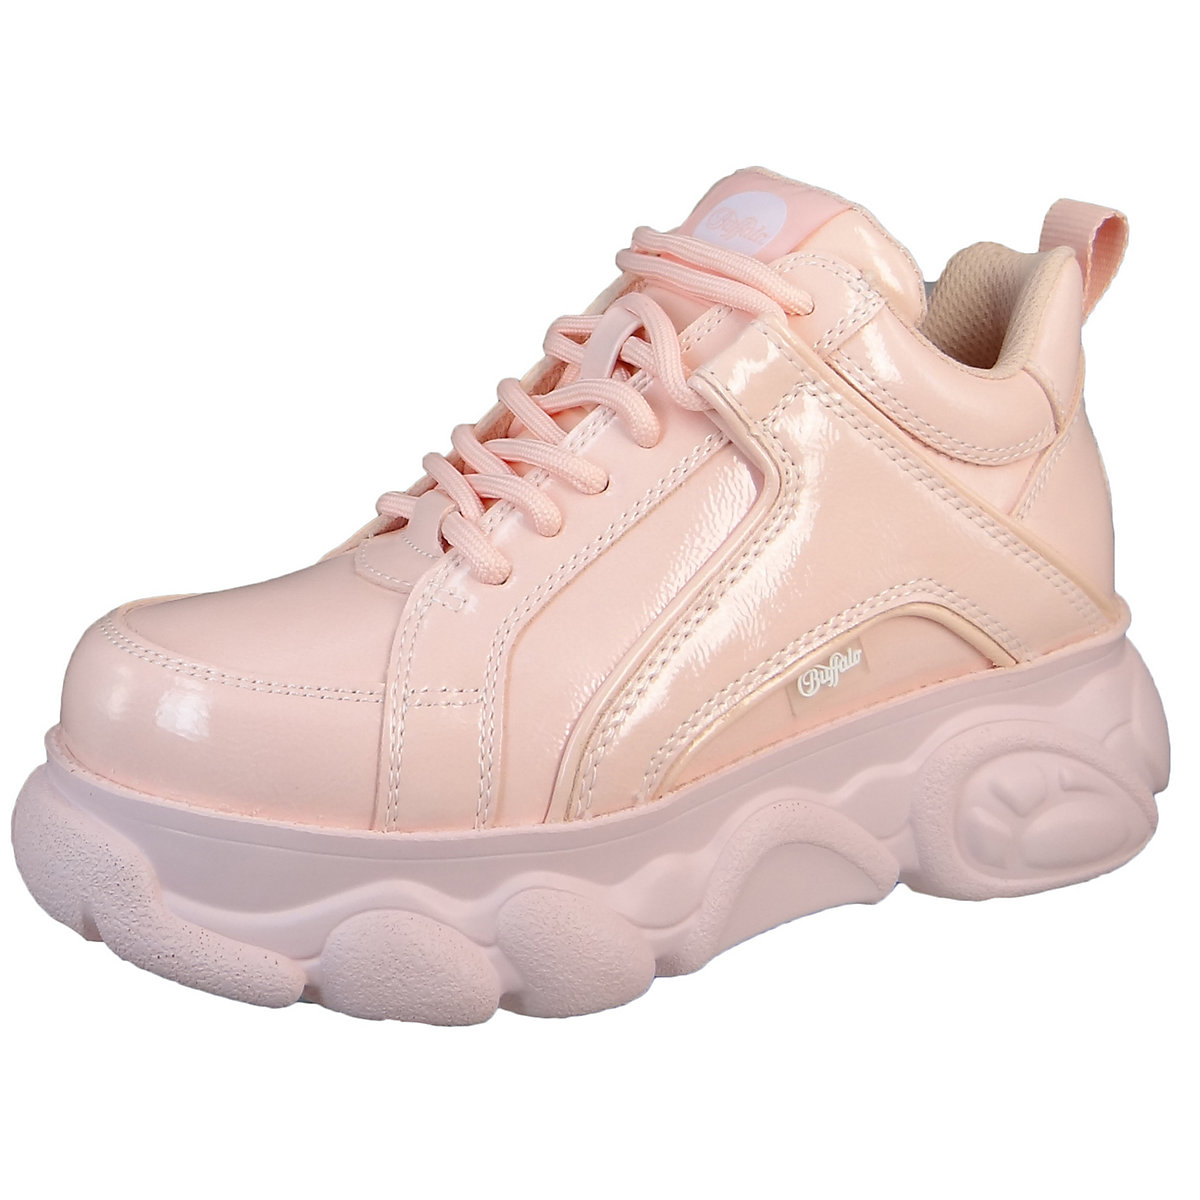 BUFFALO Damen Low Sneaker CLD Corin Patent Low Top 1630877 Rosa Baby Pink Kunstleder Sneakers Low pink